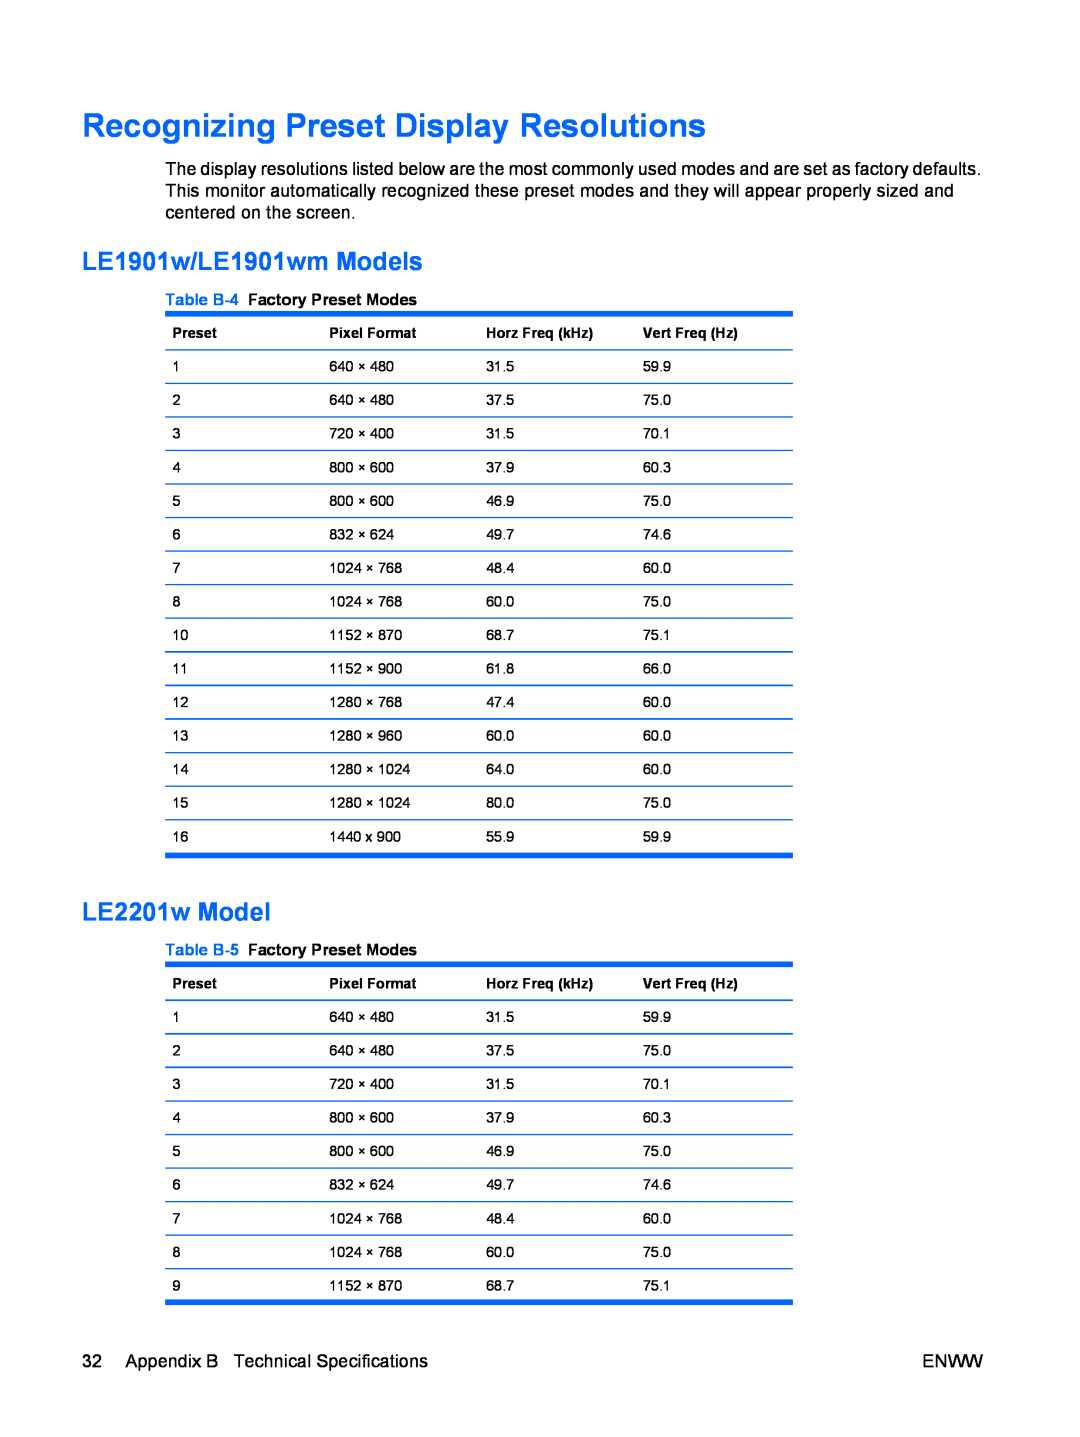 HP manual Recognizing Preset Display Resolutions, LE1901w/LE1901wm Models, LE2201w Model 